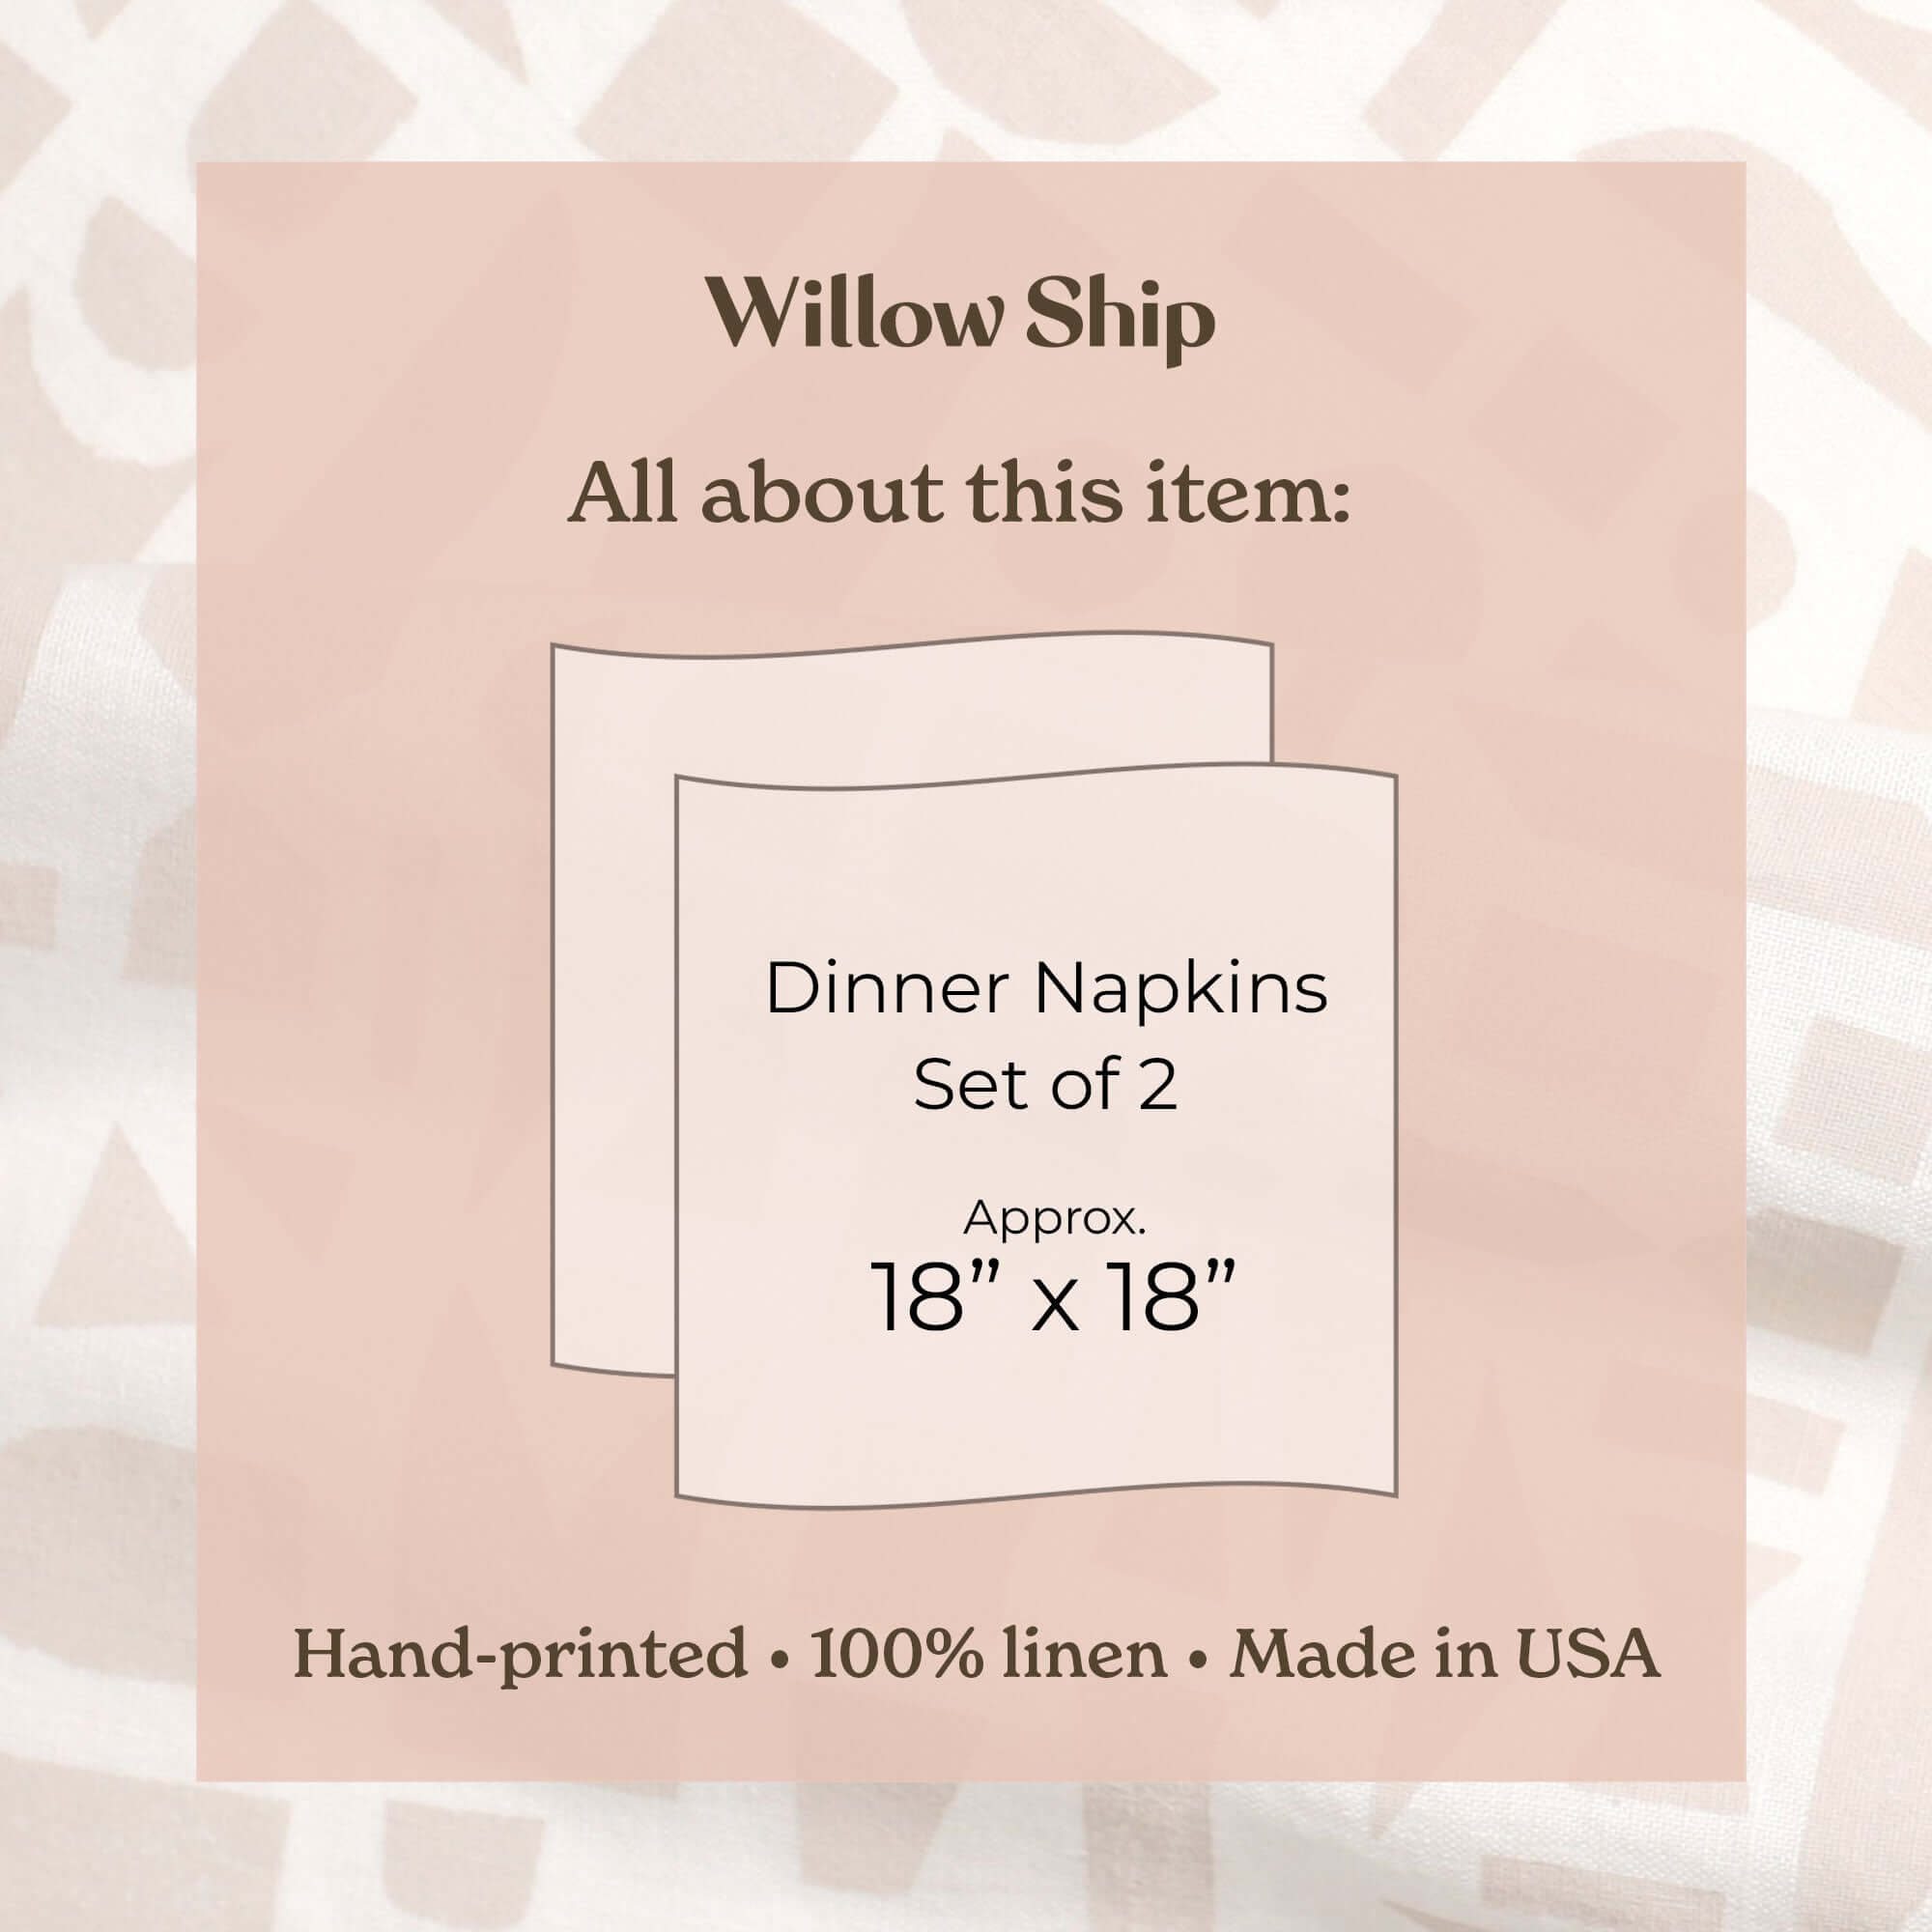 'Mixta' Hand-Printed Linen Dinner Napkins in Sand colorway